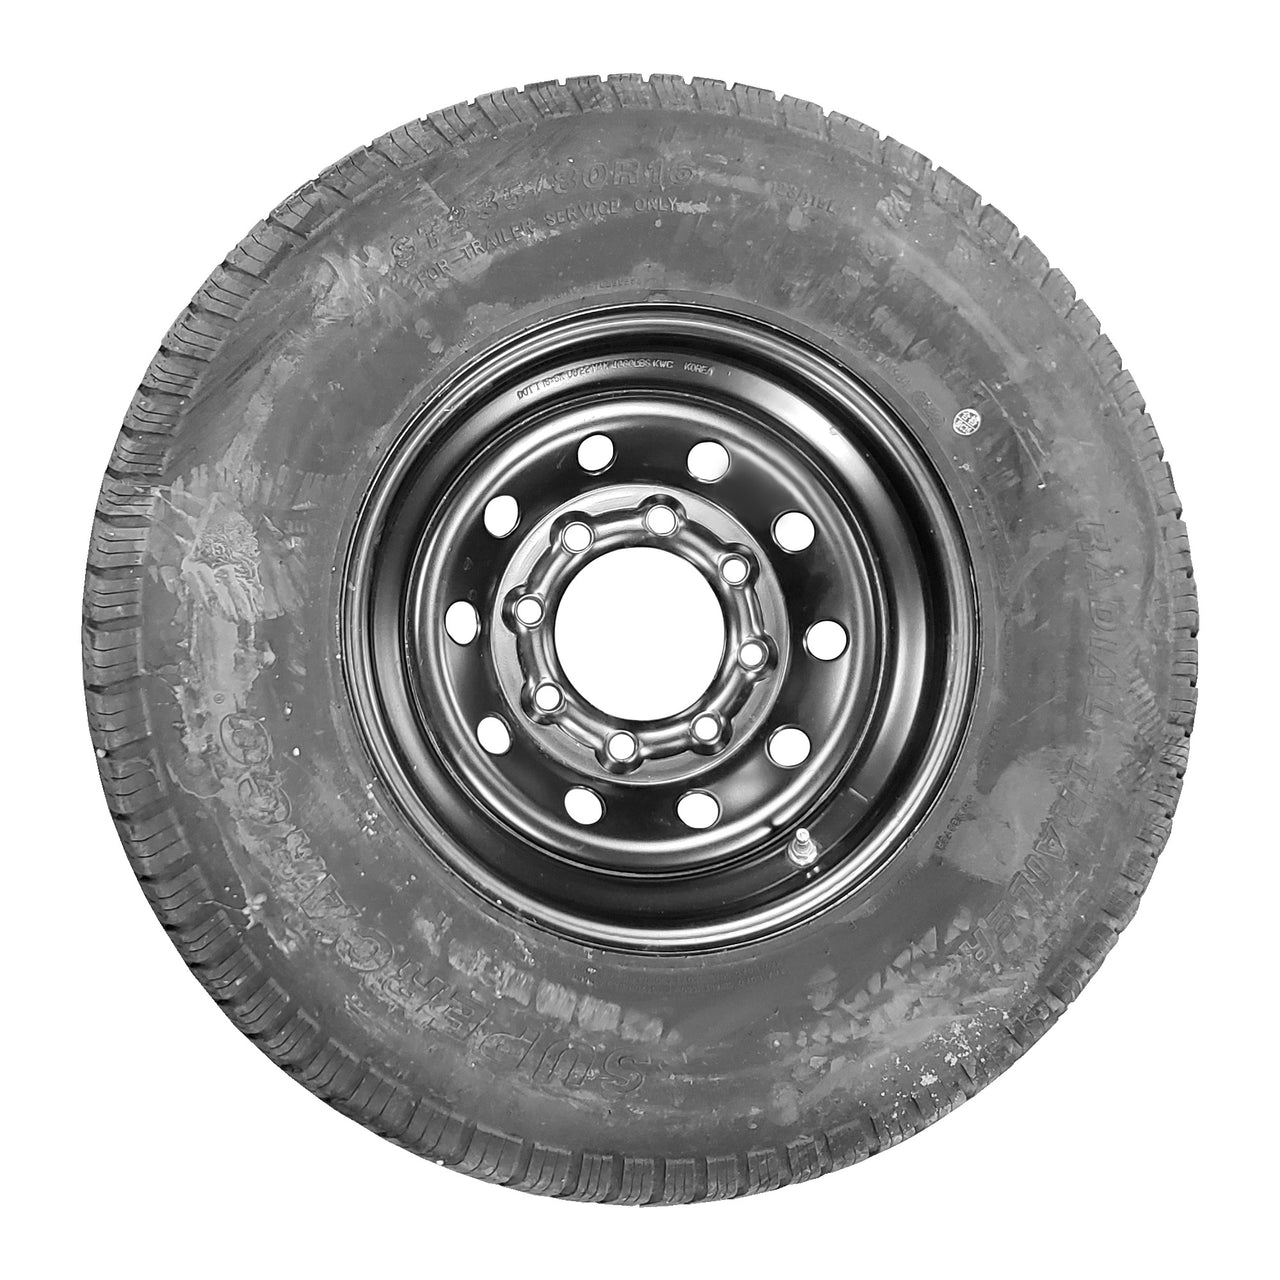 ST235/80R16 Trailer Tire w/ 16" - 8 on 6-1/2"